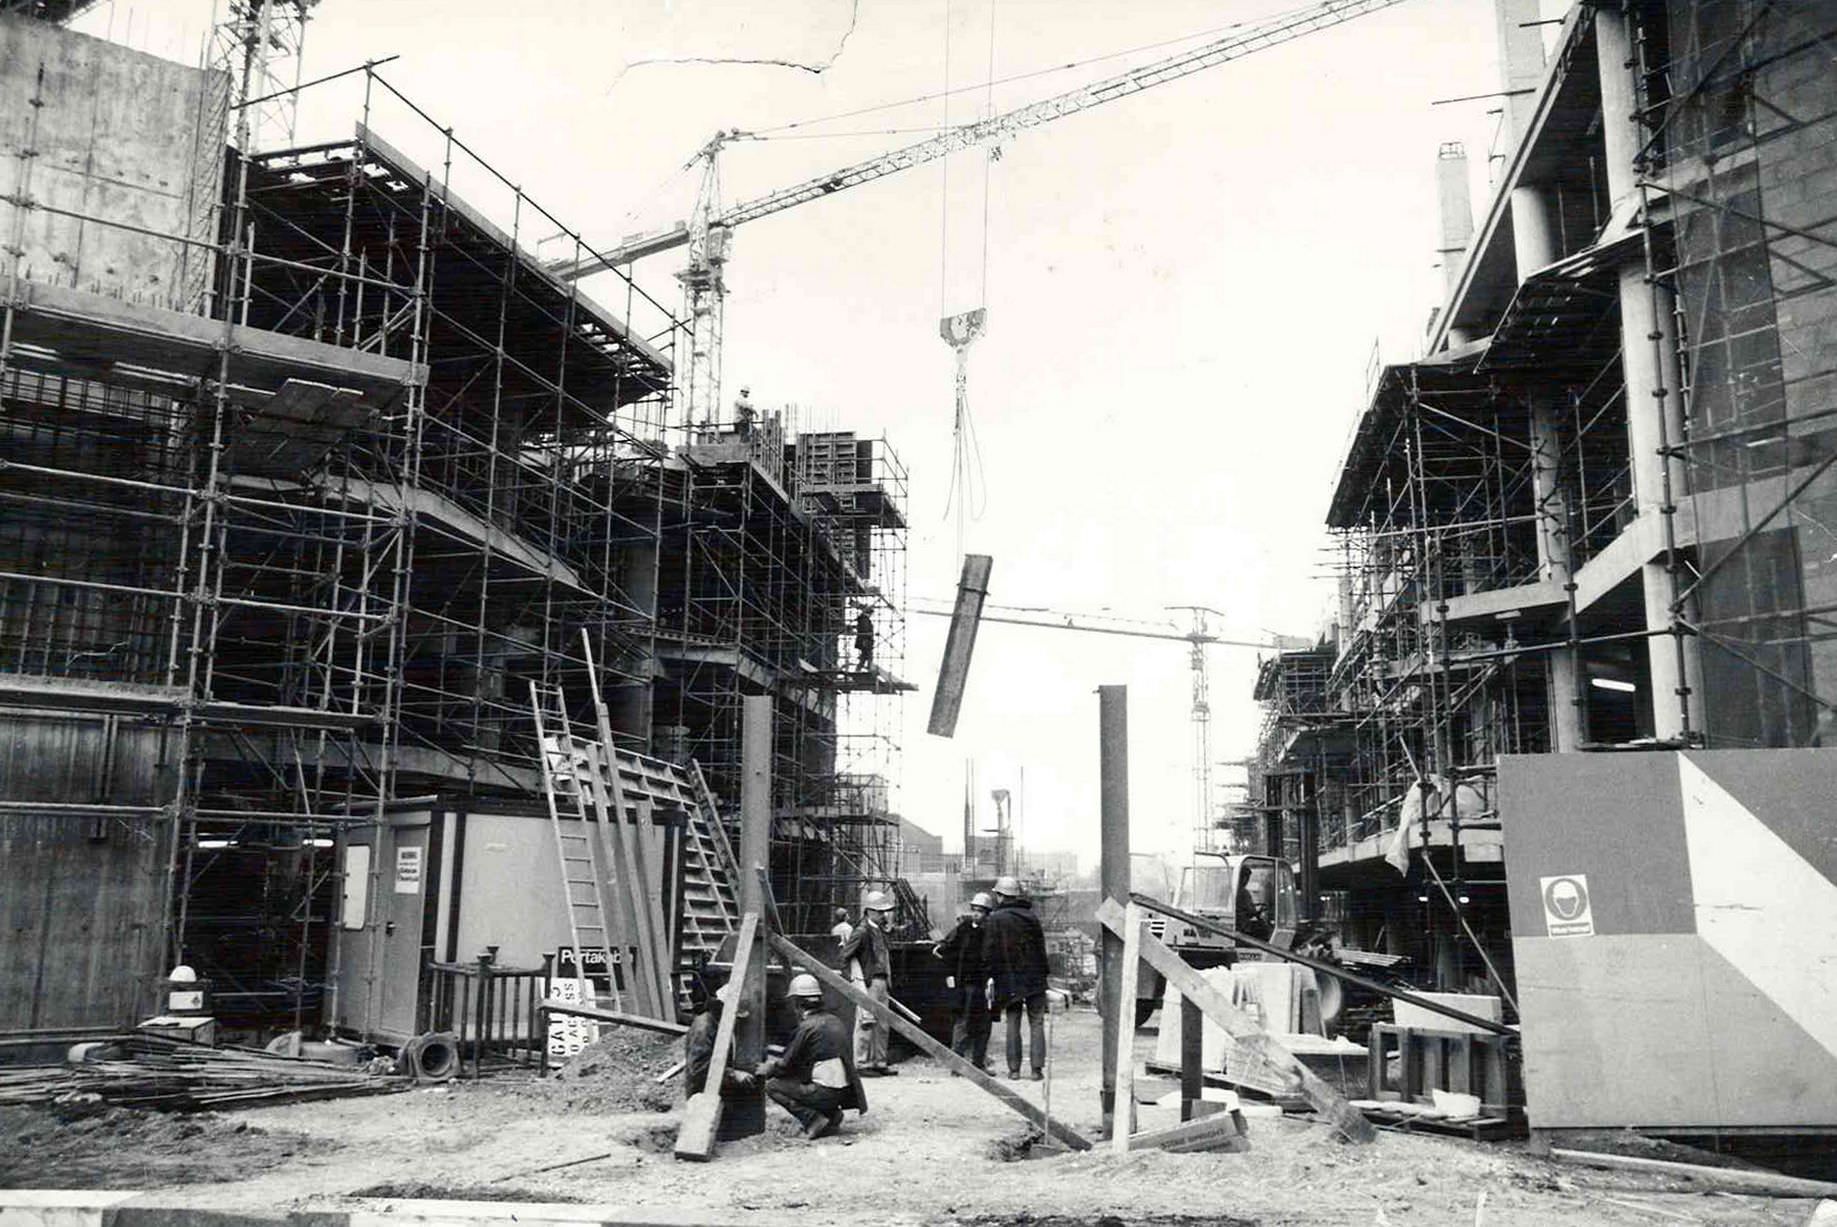 ICC under construction, 4th October 1988.